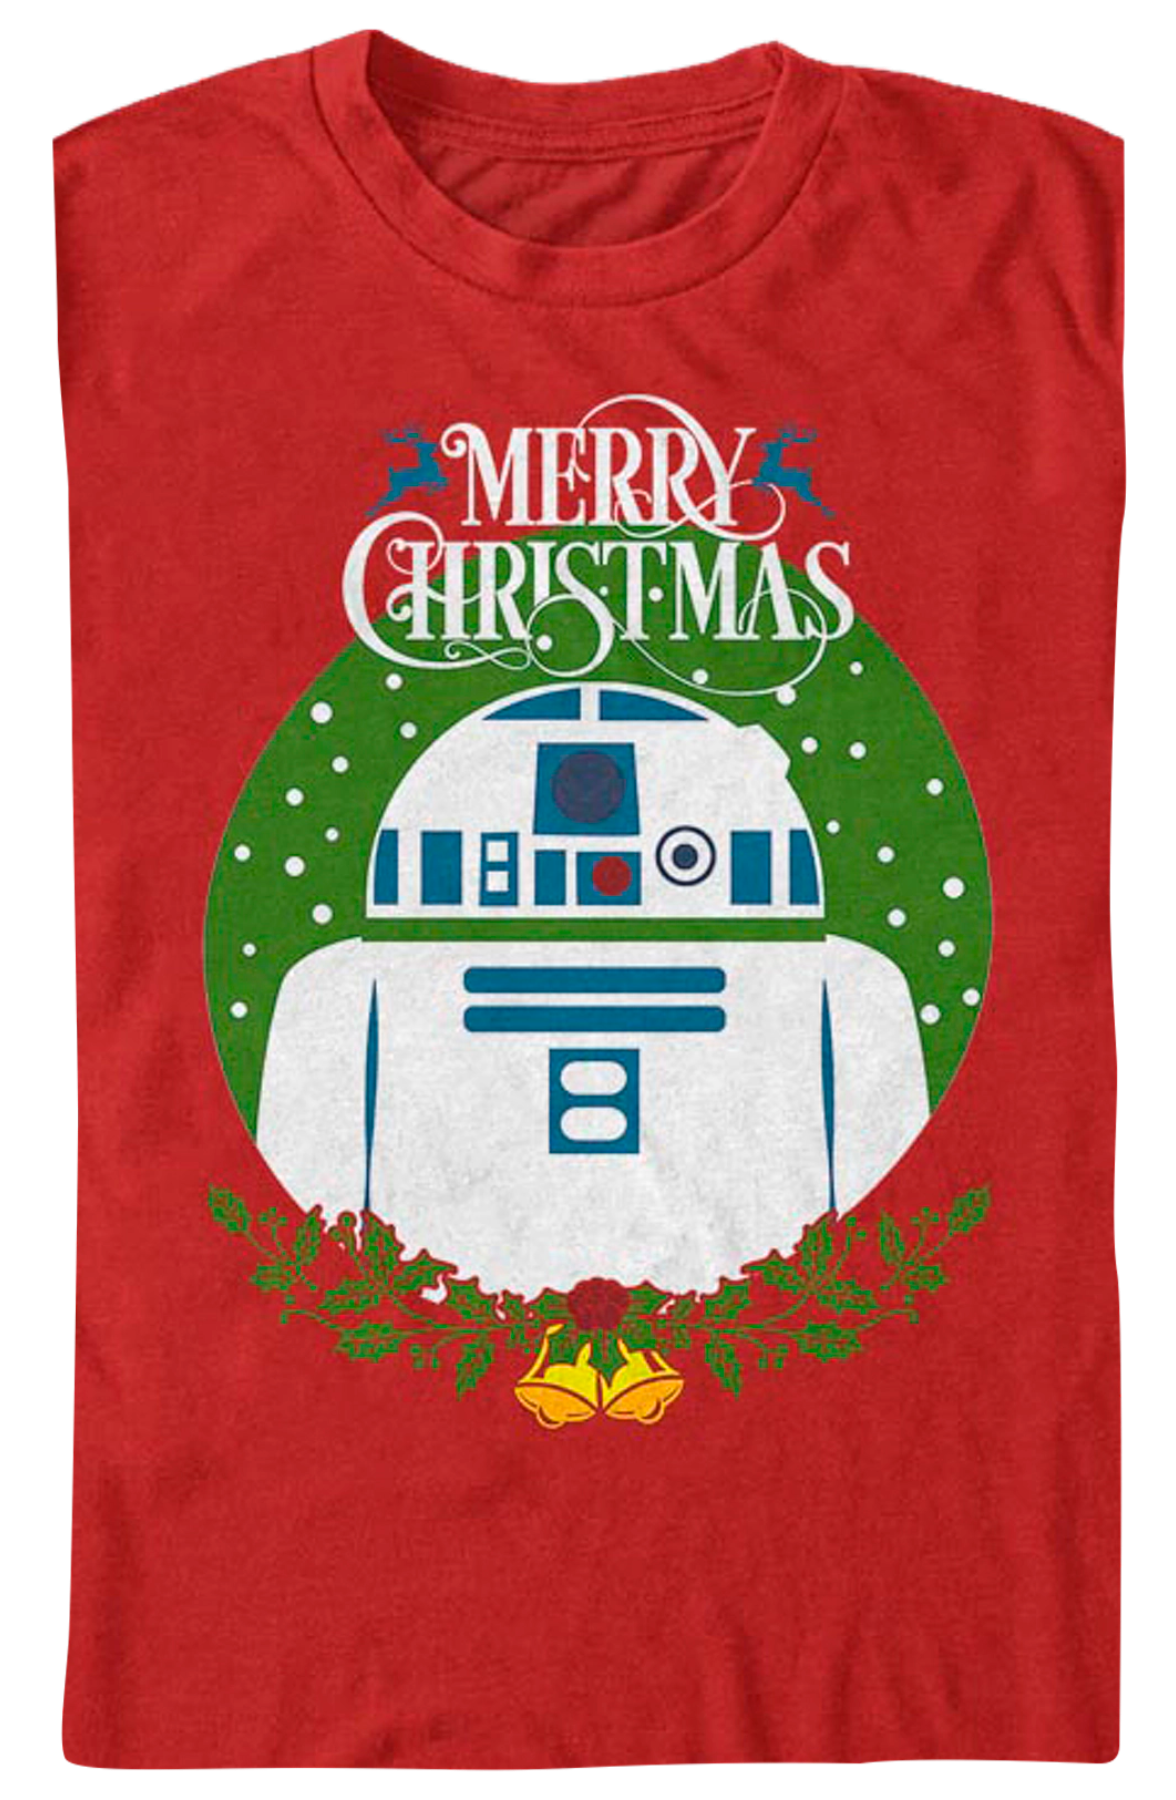 R2-D2 Merry Christmas Star Wars T-Shirt